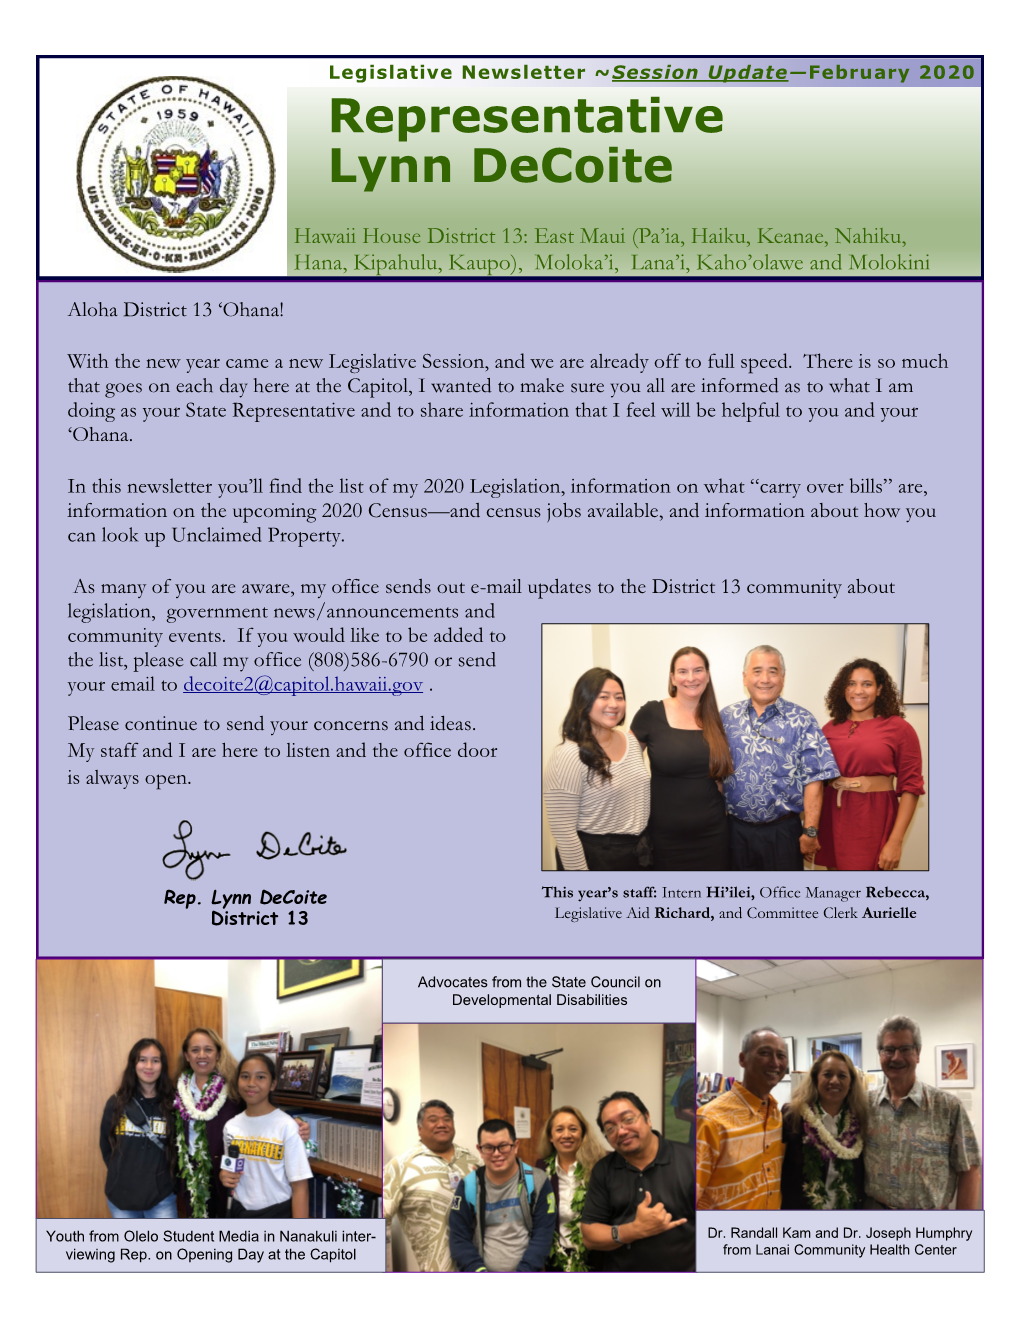 Representative Lynn Decoite